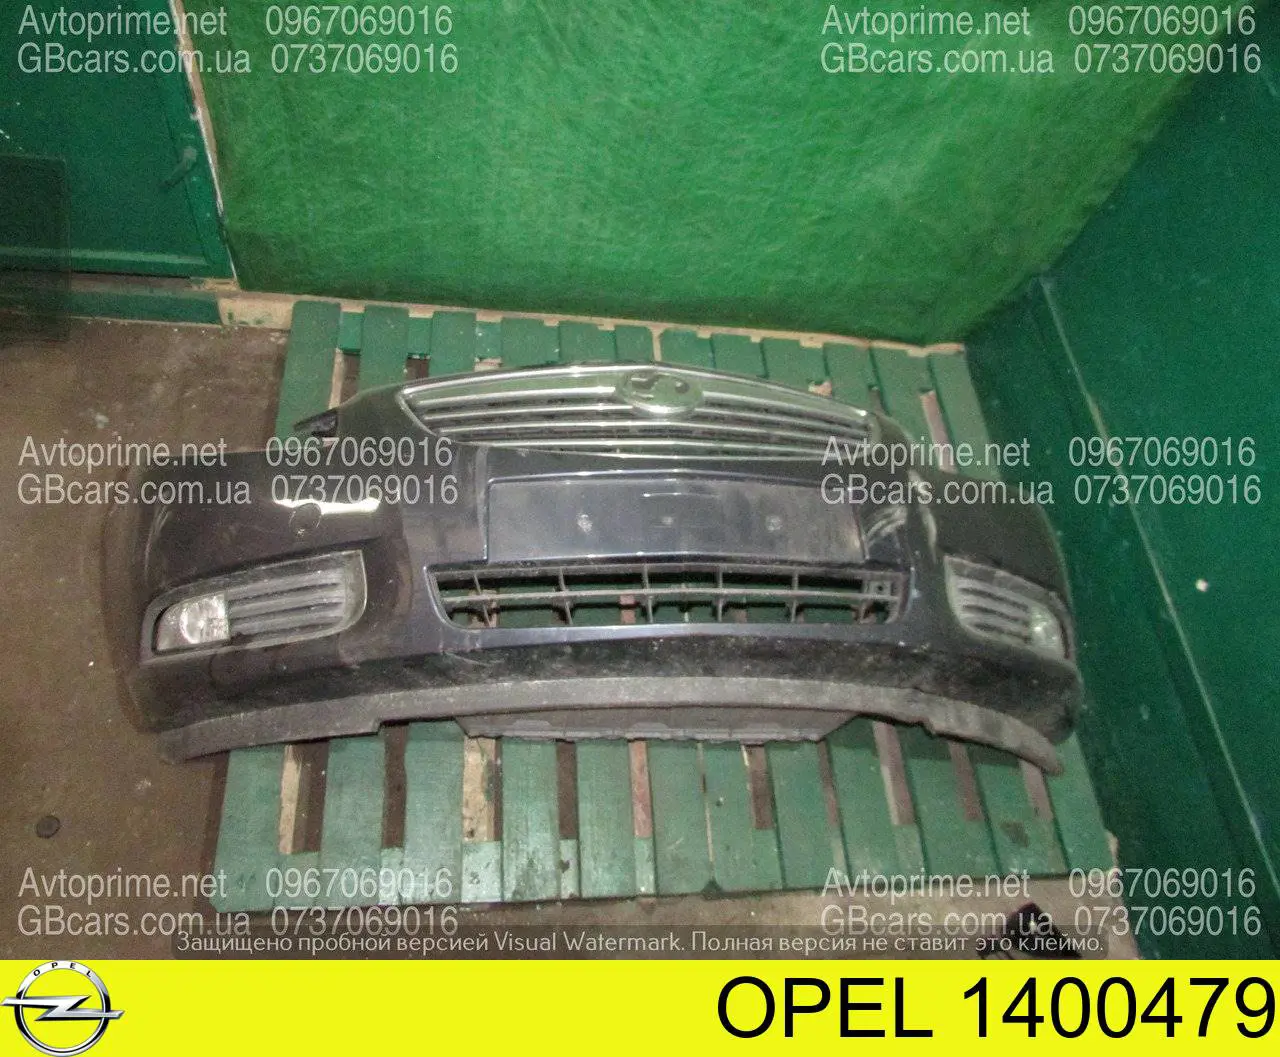 1400479 Opel передний бампер